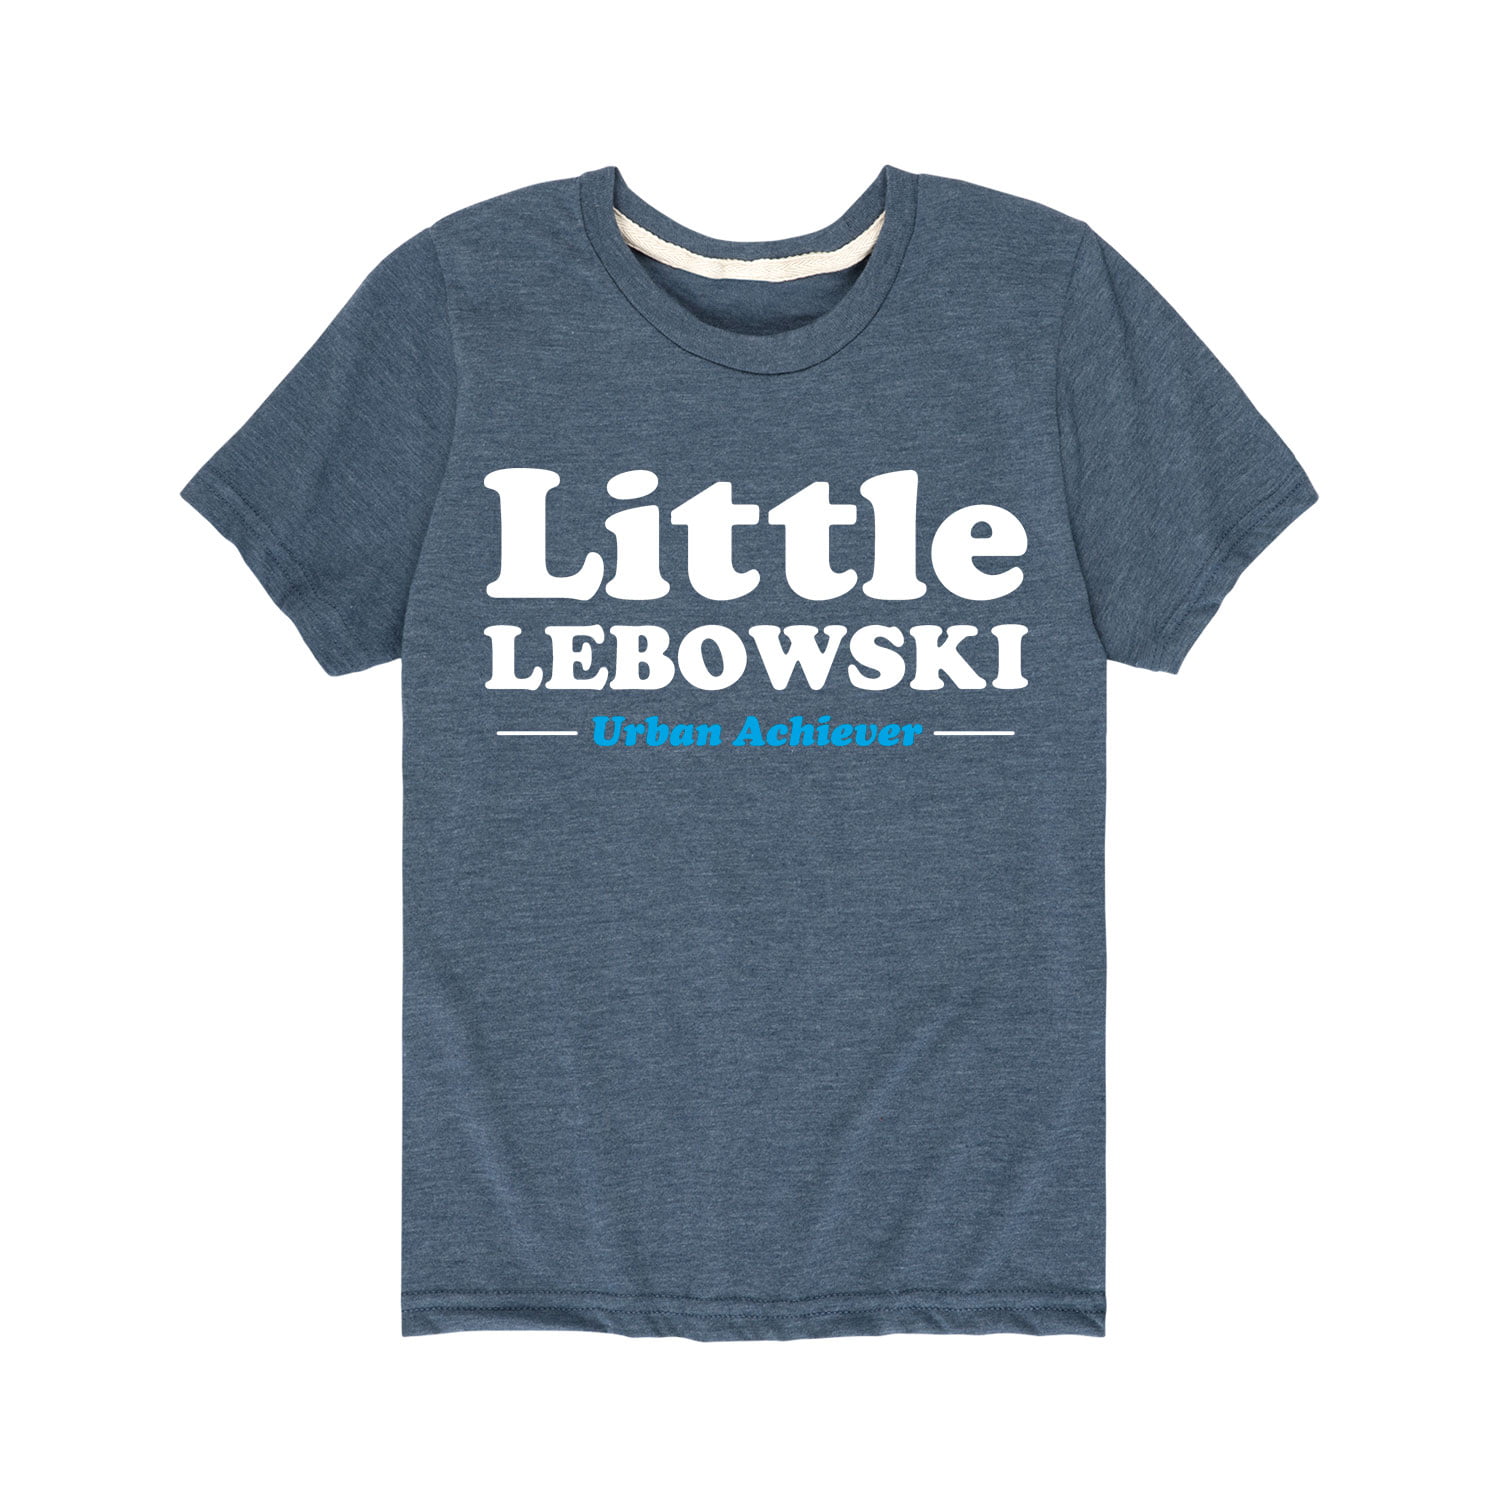 Little Lebowski Urban Achievers. Urban Achievers Lebowski Shirt. Urban Achievers Shirt. Message little